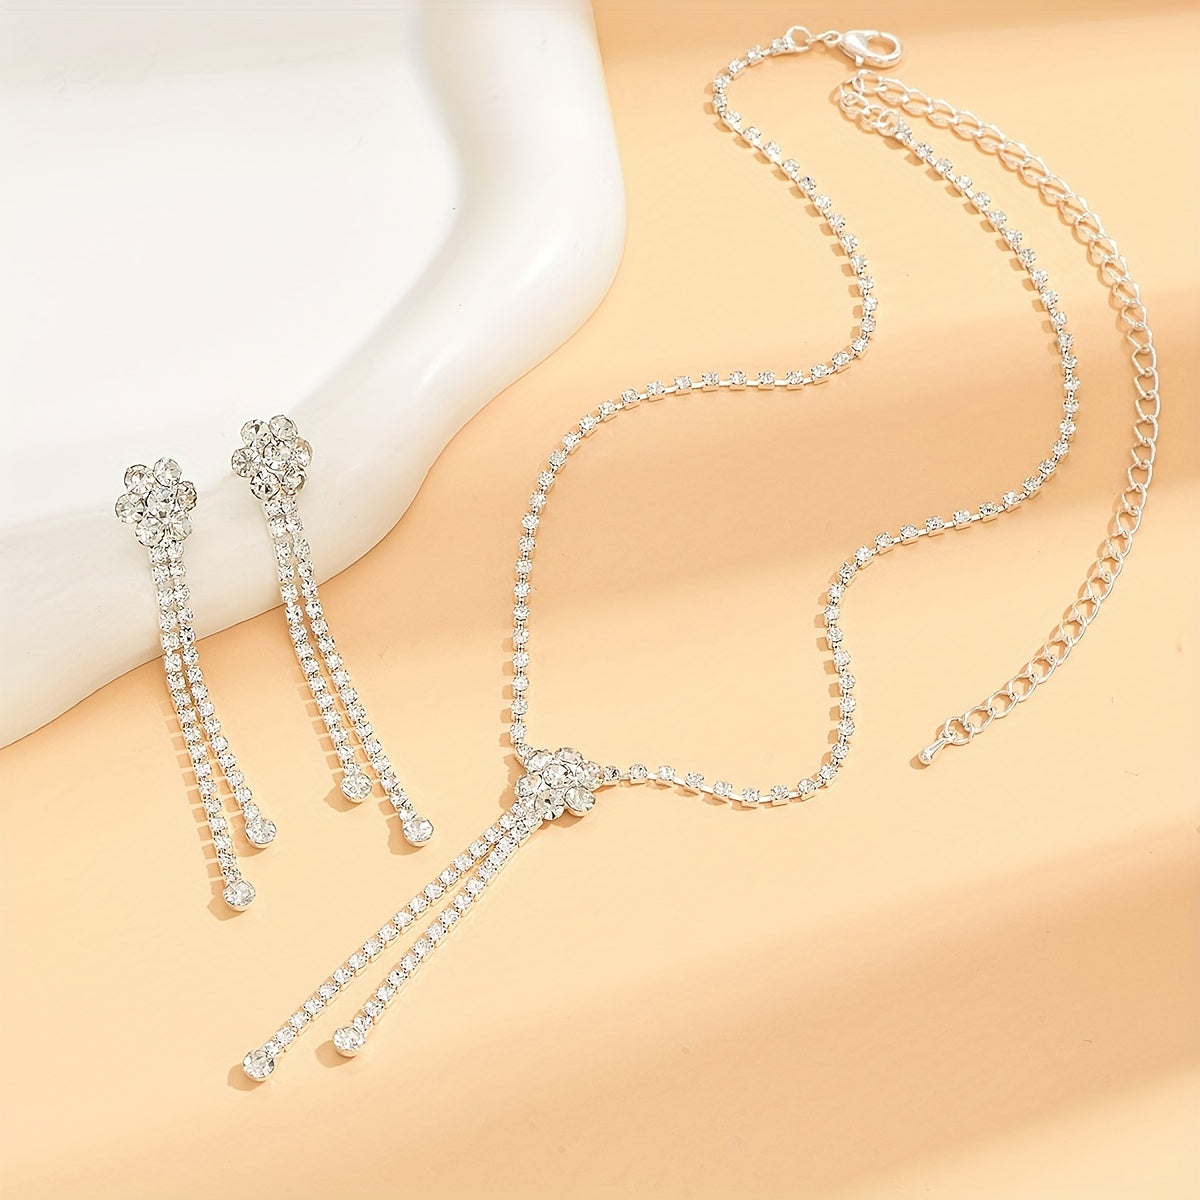 Elegant Plum Blossom Tassel Jewelry Set - Necklace and Earrings for Women